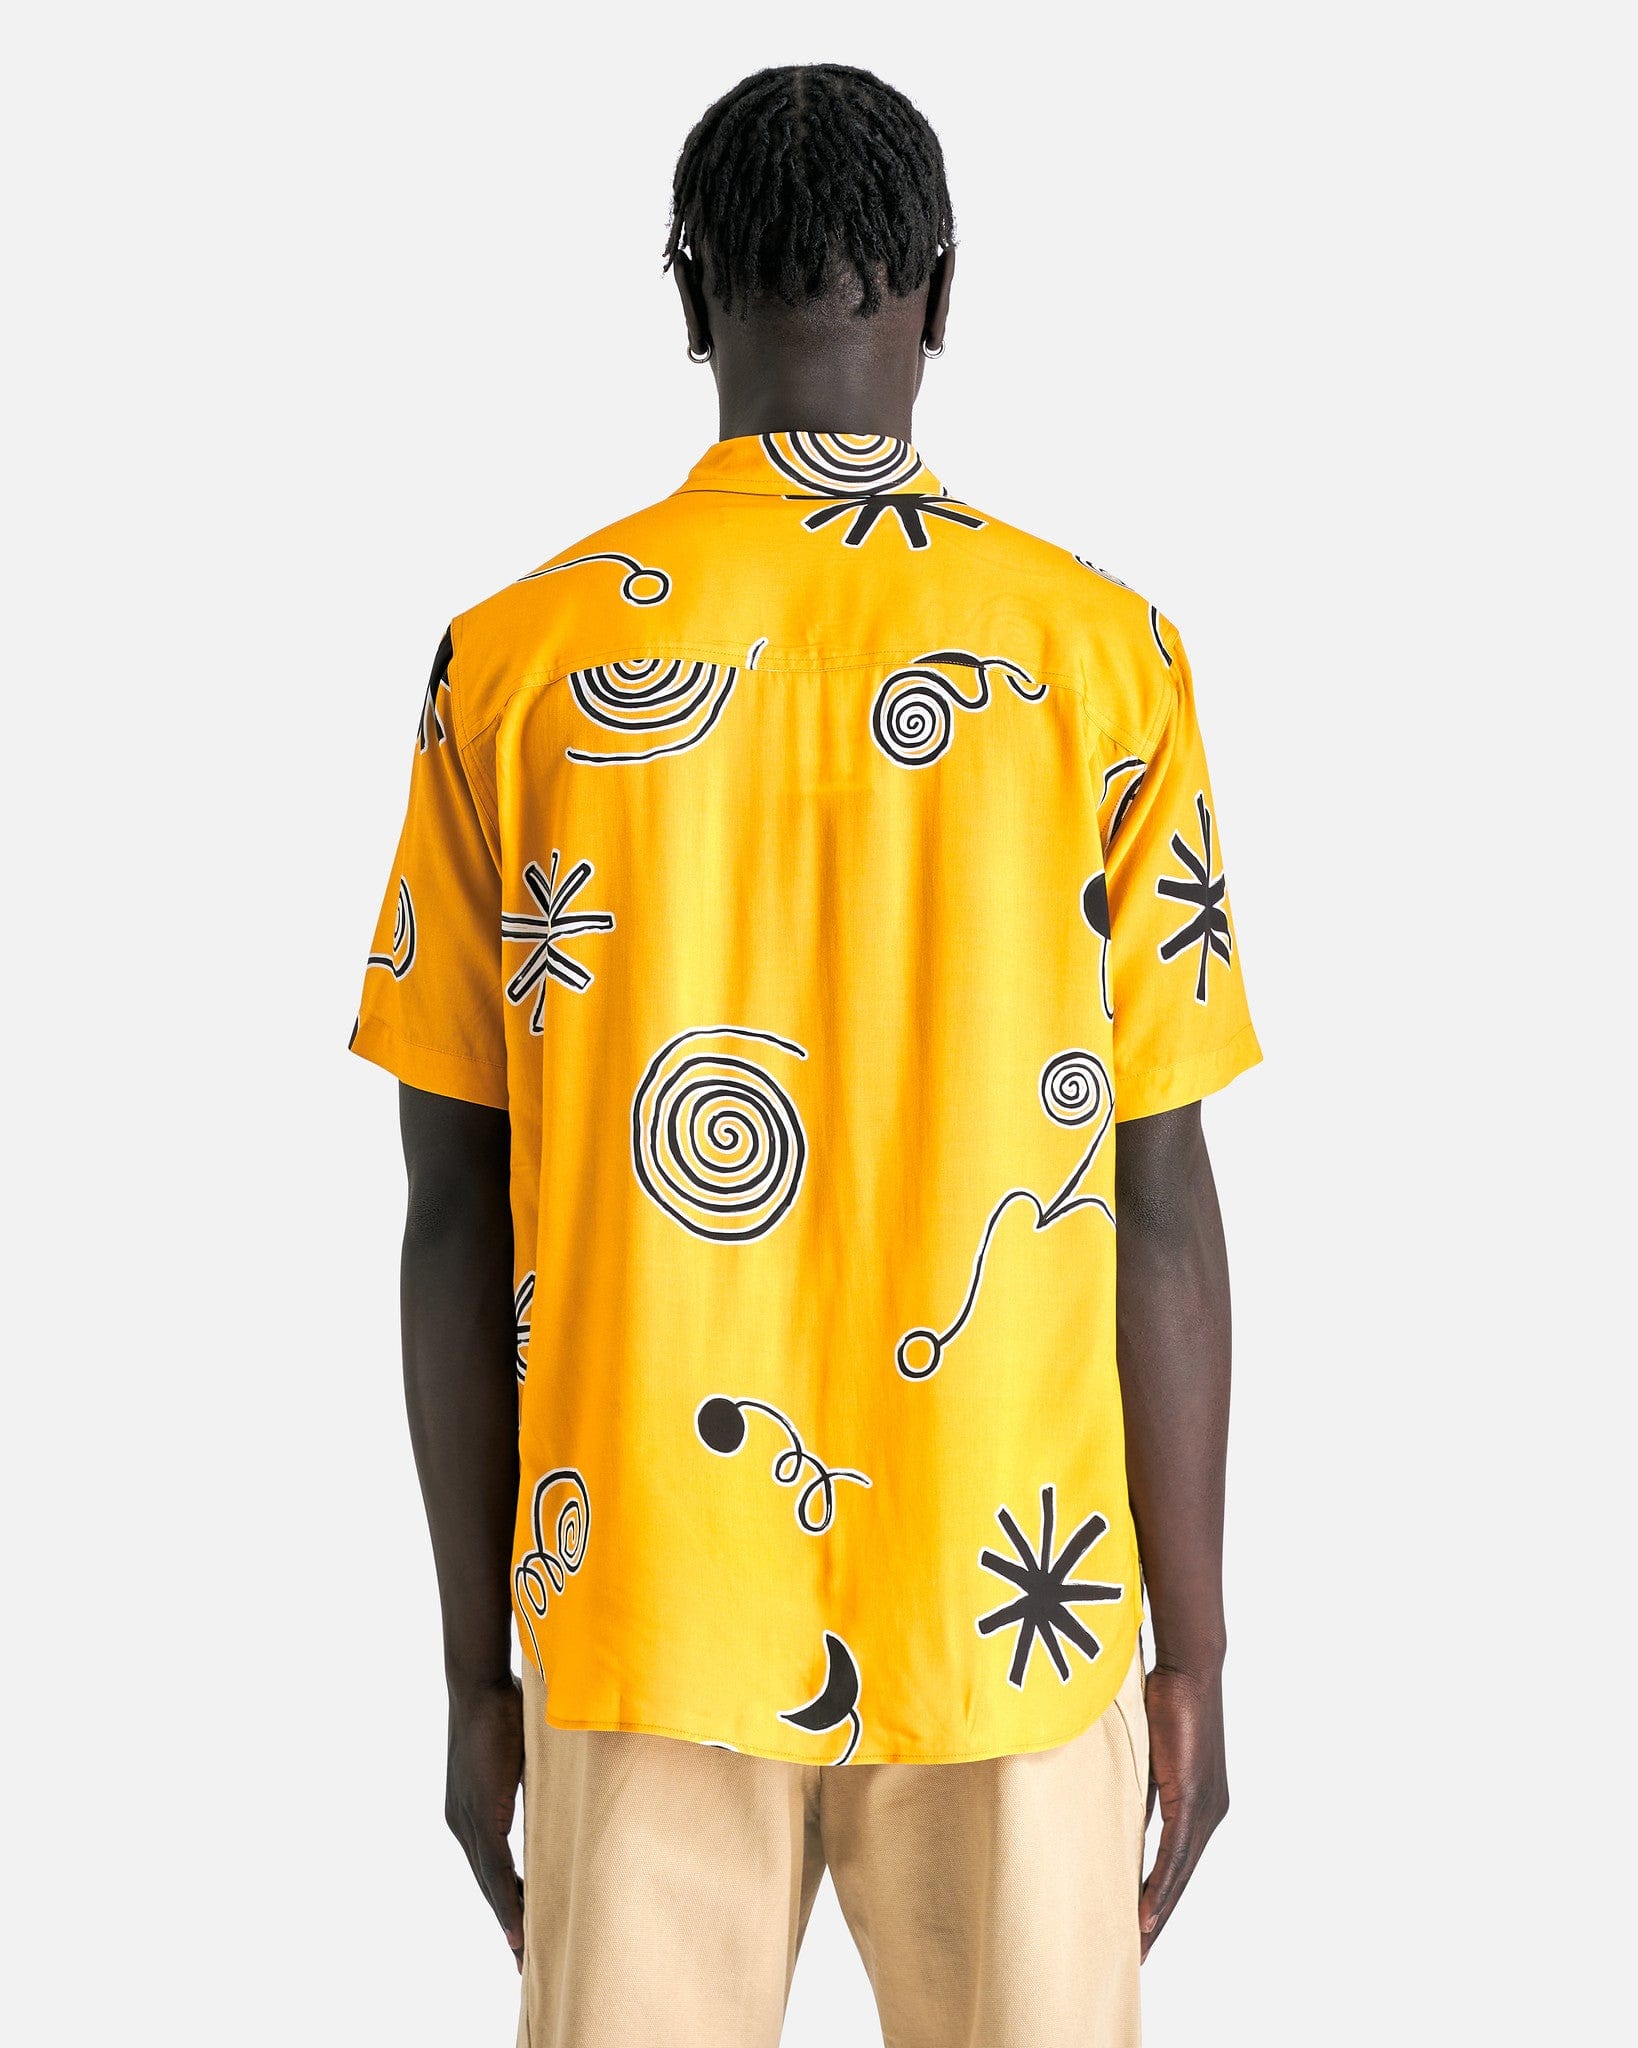 Jacquemus Men's Shirts La Chemise Melo in Arty Spiral Black/Orange